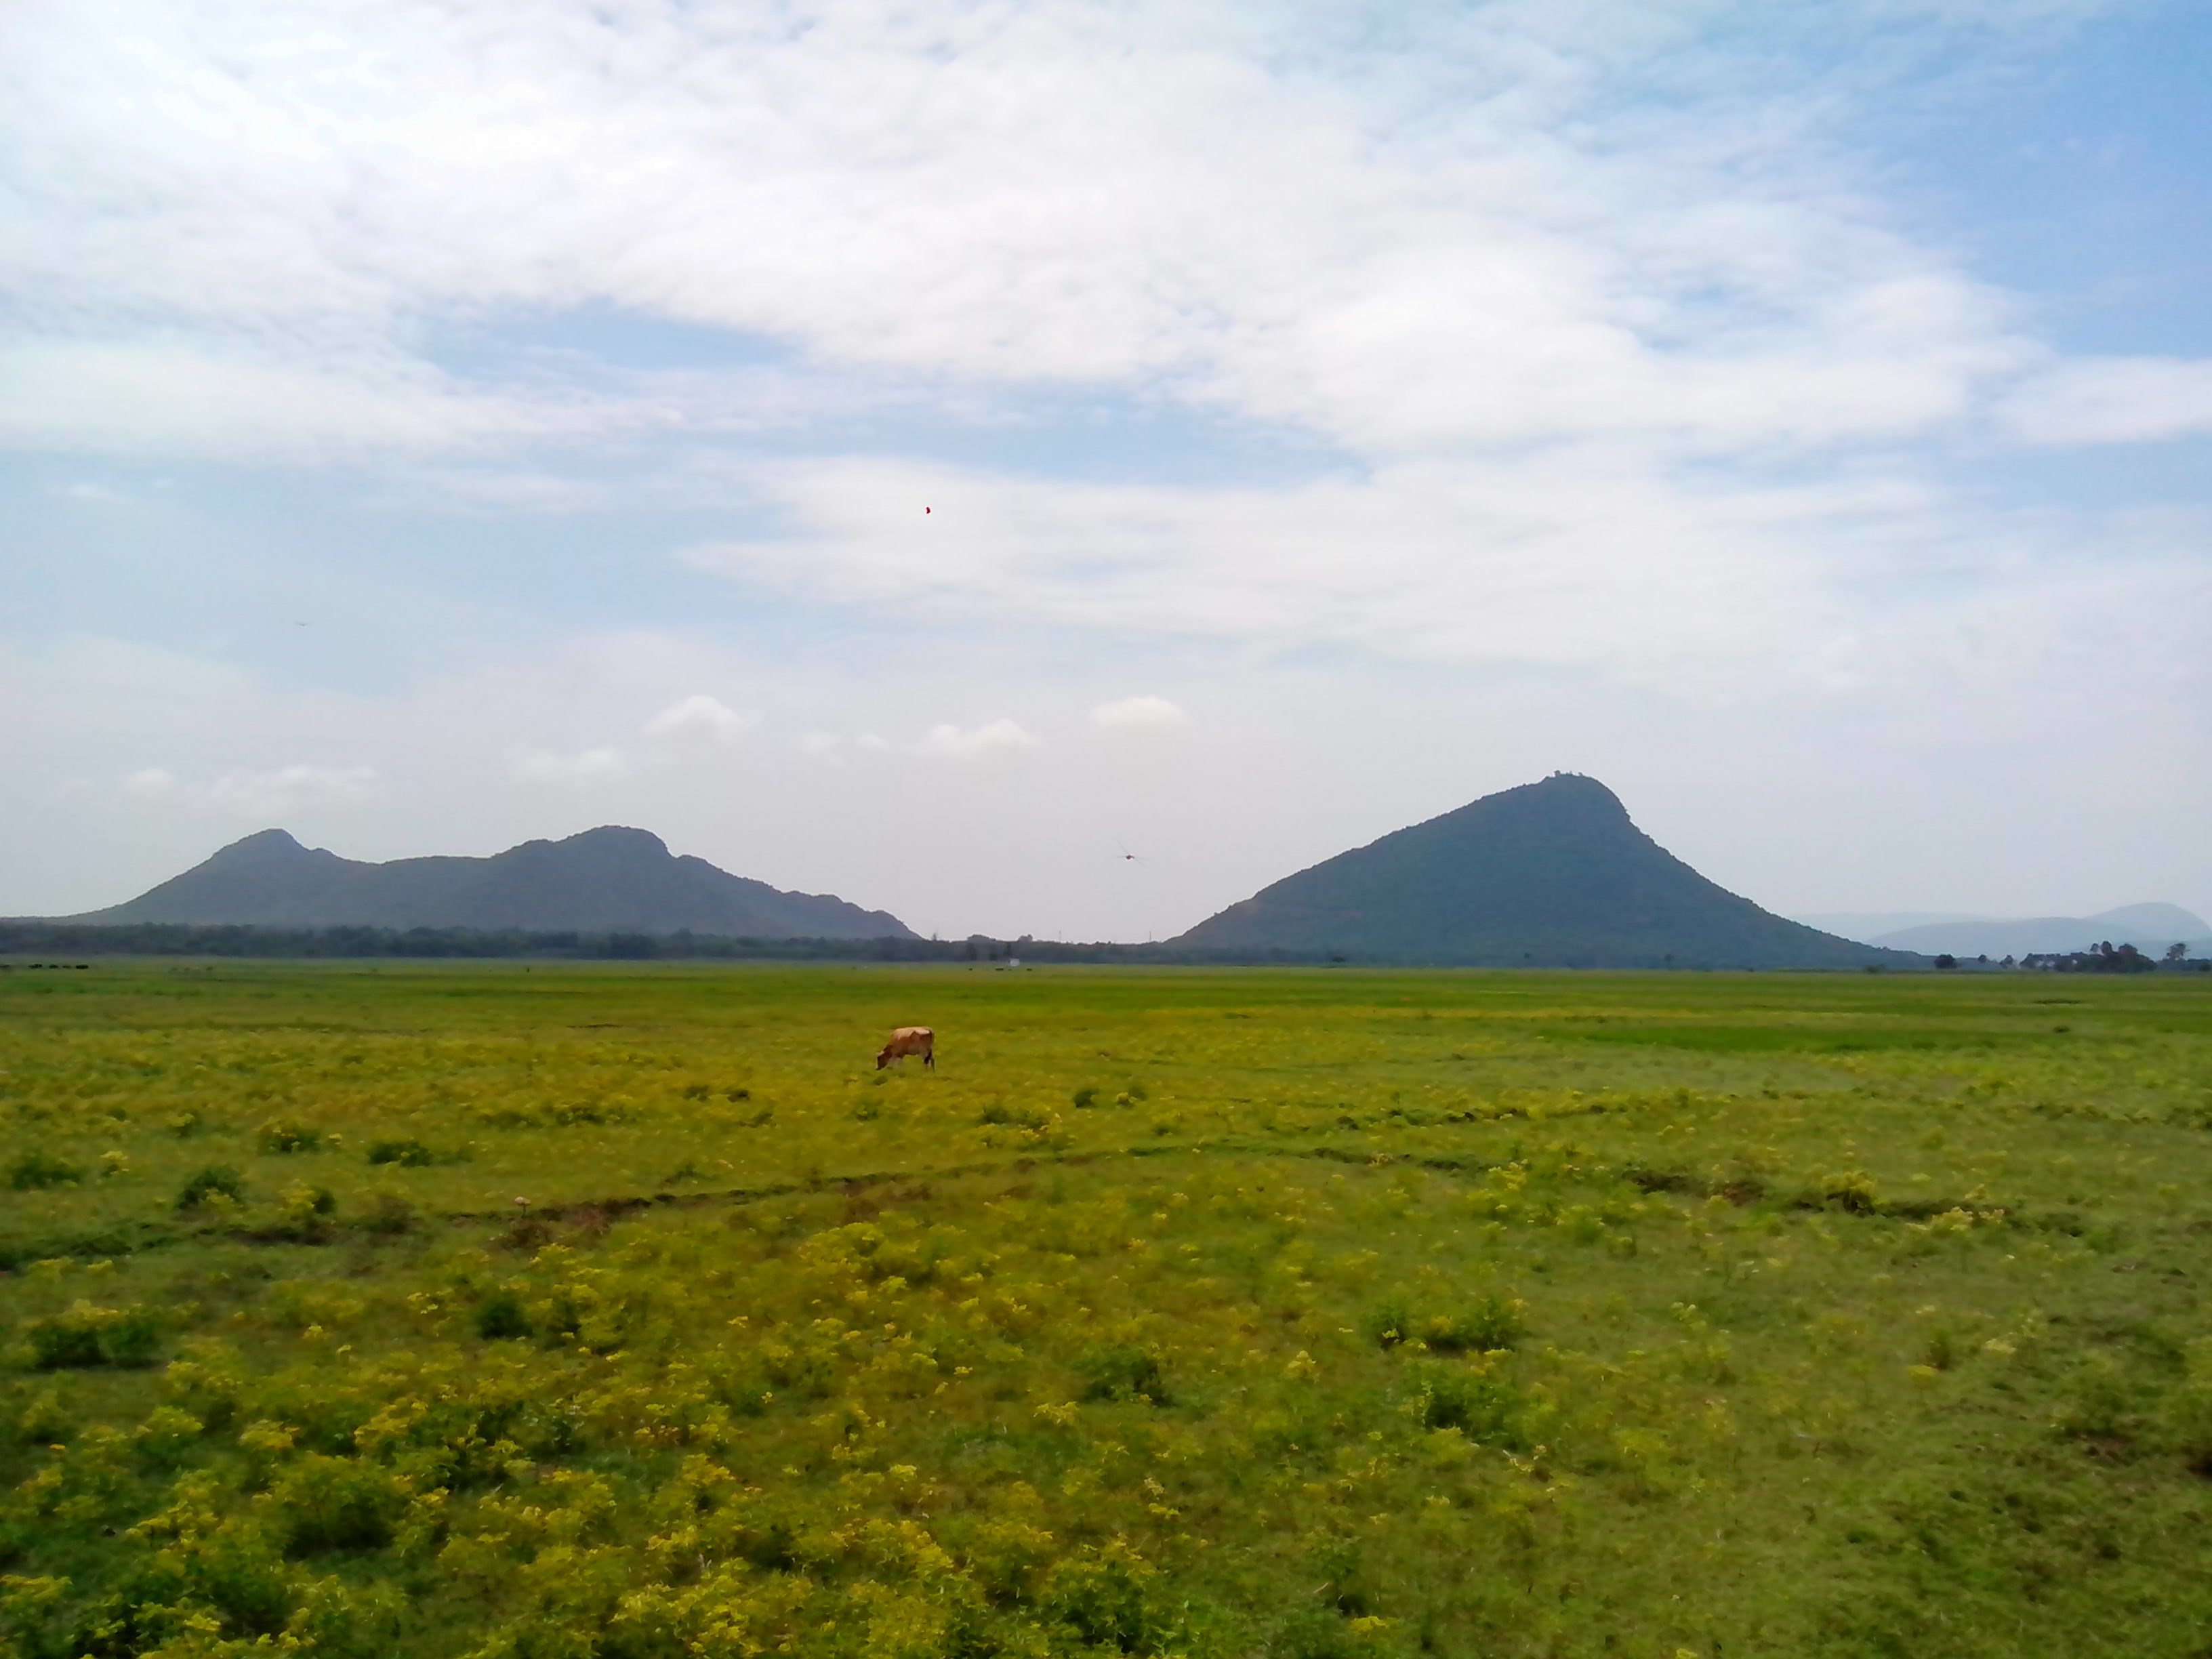 File:Landscape View at Potnuru Village.jpg - Wikimedia Commons